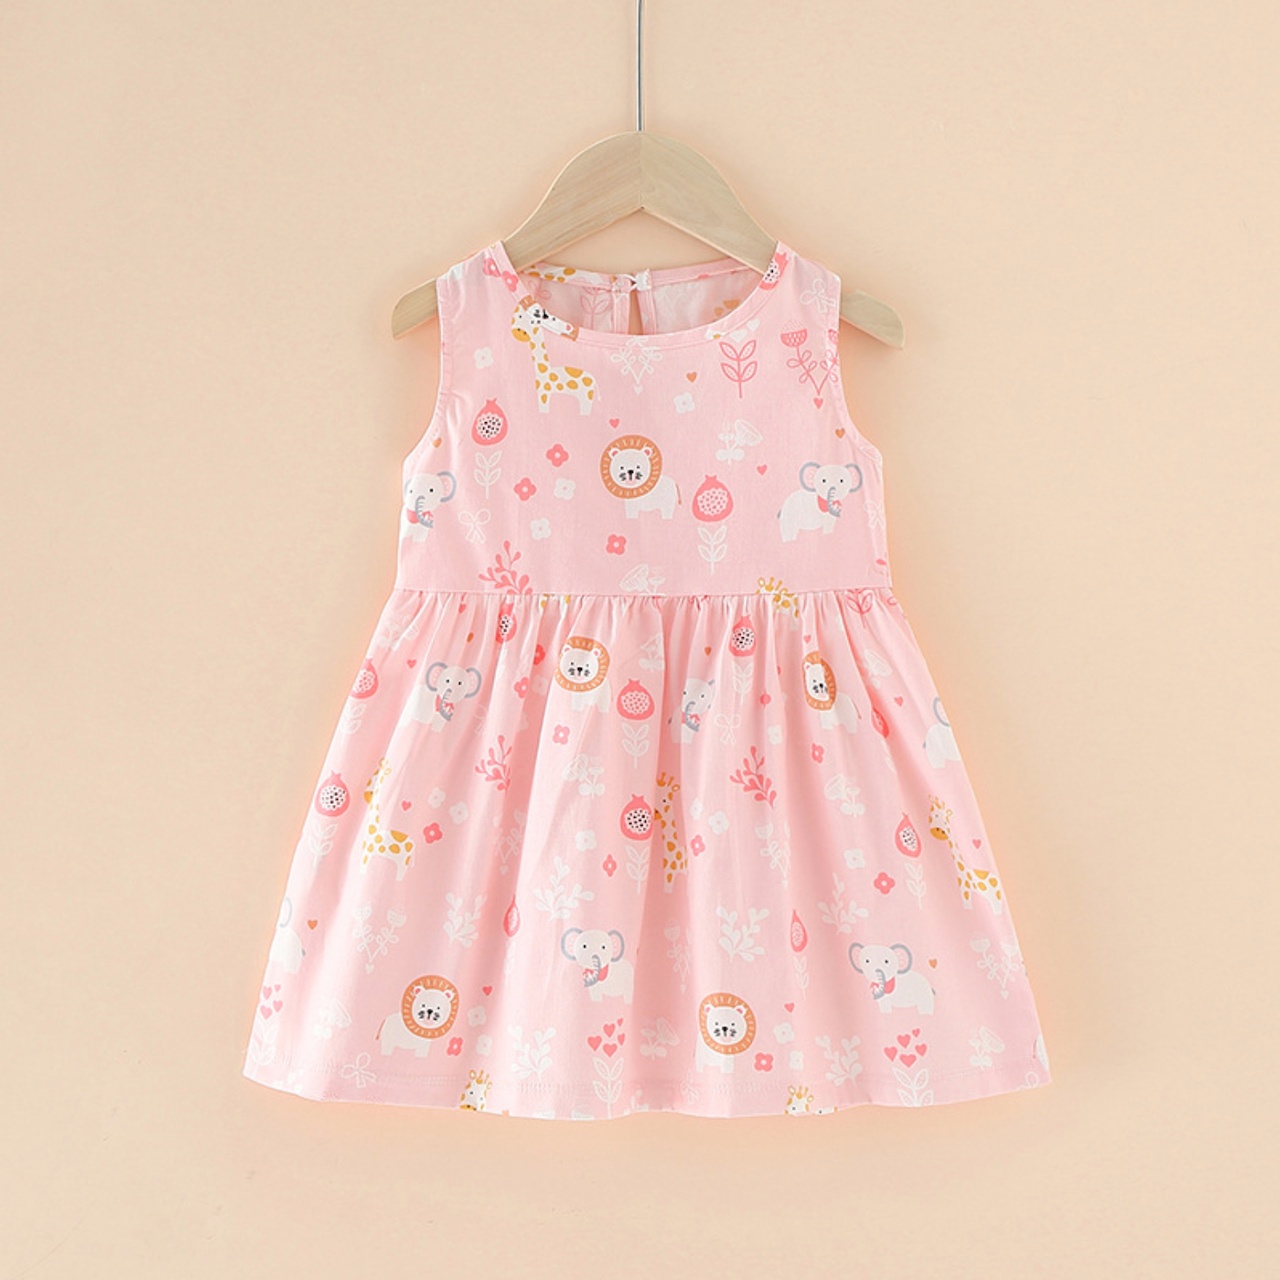 Mini Baby เดรสเด็กผู้หญิง (ลายใหม่ปี 2021) มินิเดรส เดรสเด็ก เดรส dress cotton ผ้าดีมาก งานสวยมาก สีสวยสุดๆ